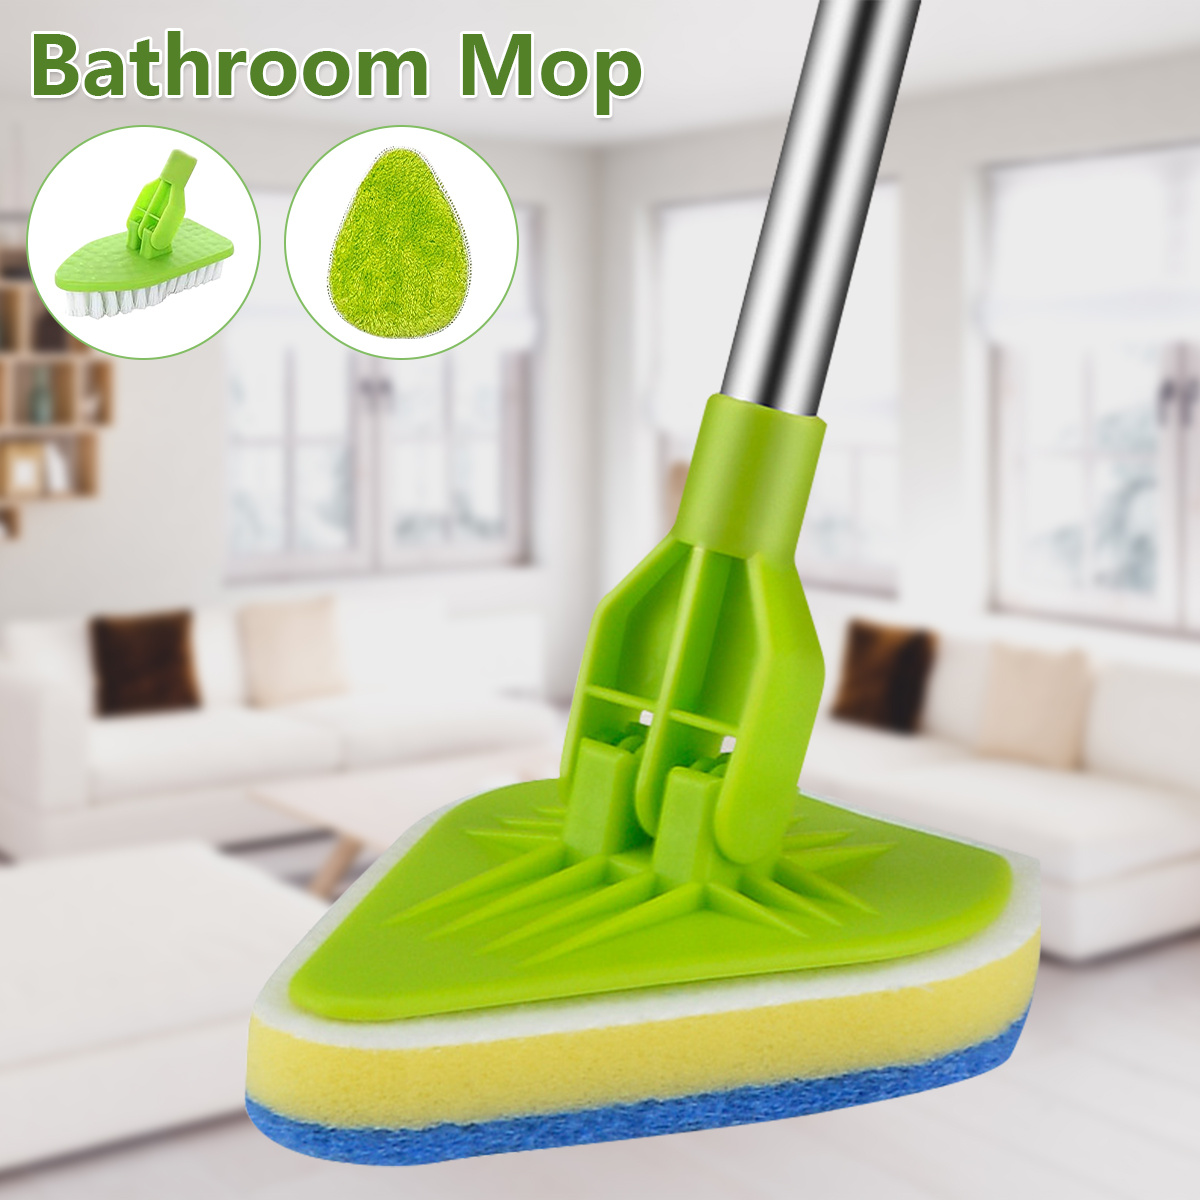 2023 Multifunctional Bathroom Wall Brush Household Floor Bathtub Brush Long  Handle Removable Tile Sponge Cleaning Brush - AliExpress